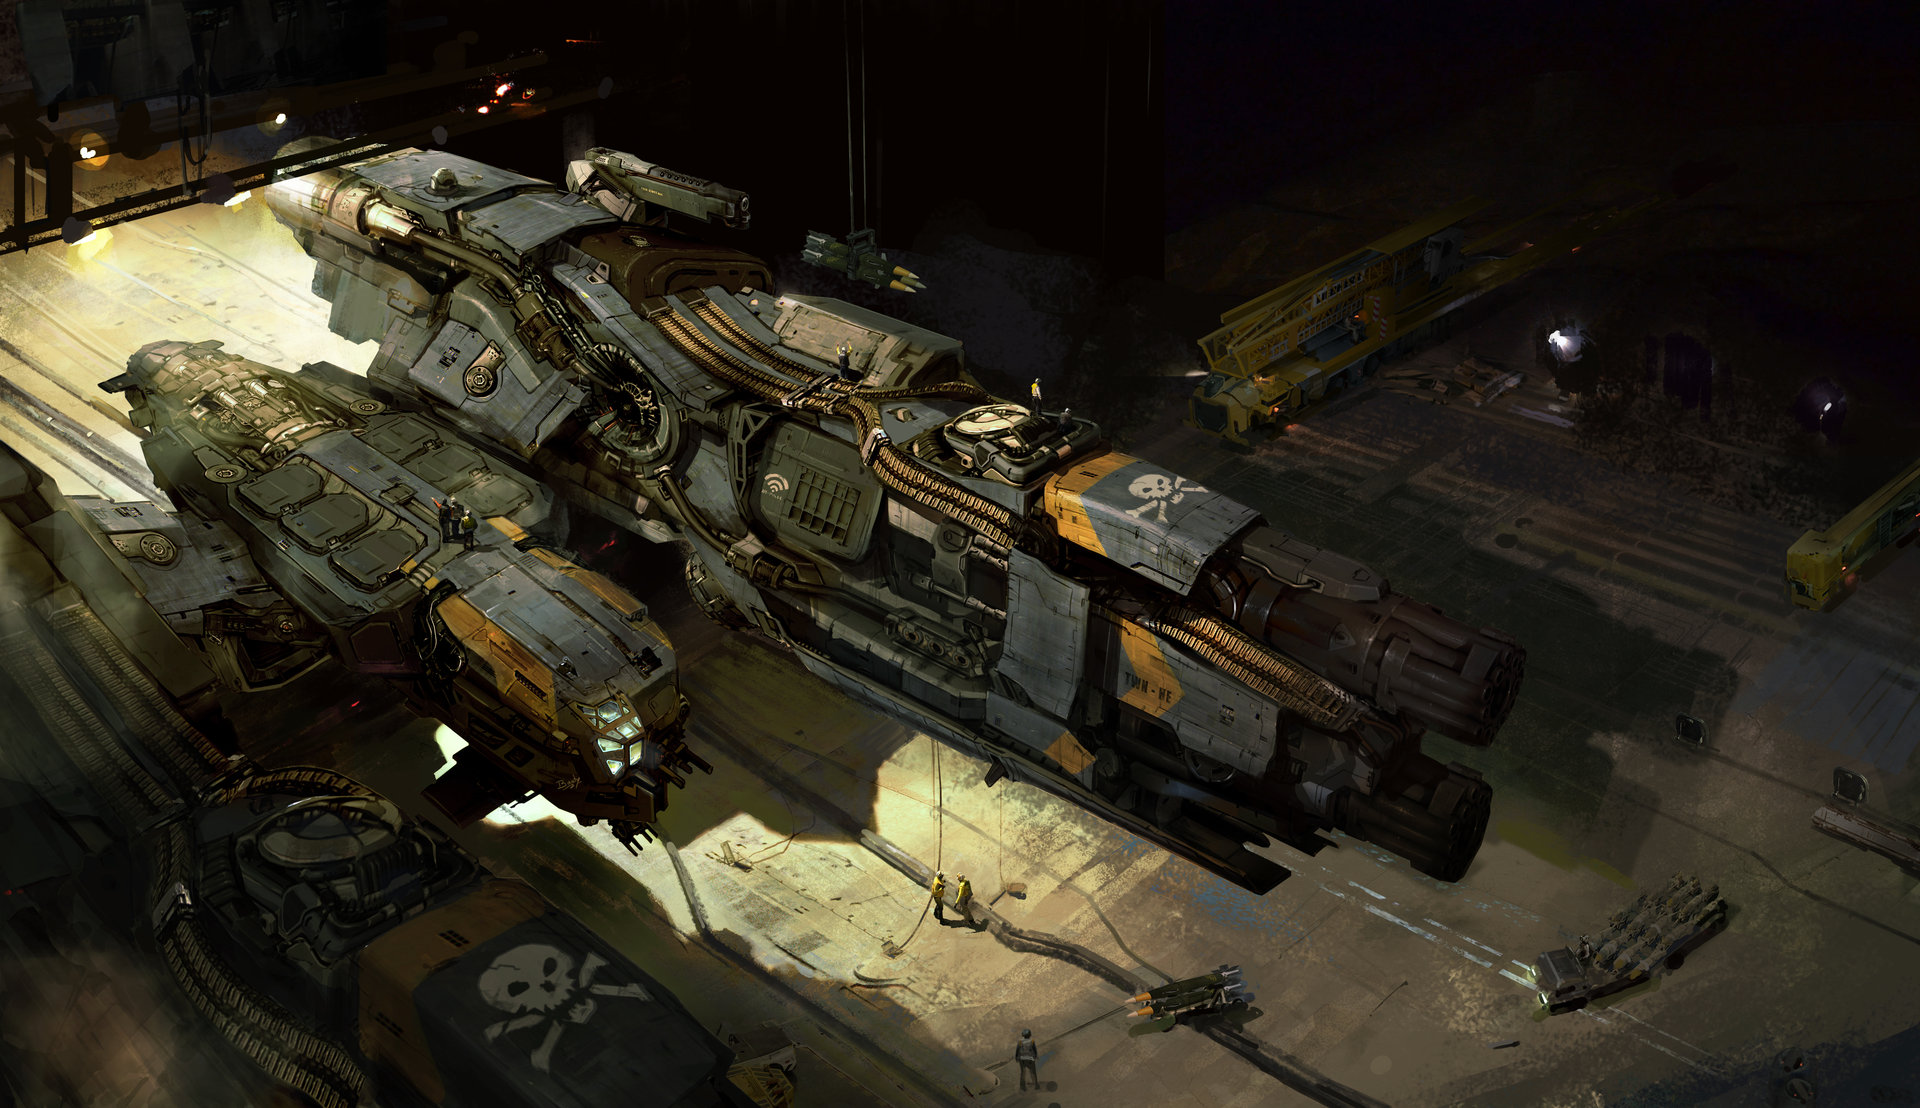 General 1920x1108 Dreadnought spaceship science fiction ship military digital art futuristic